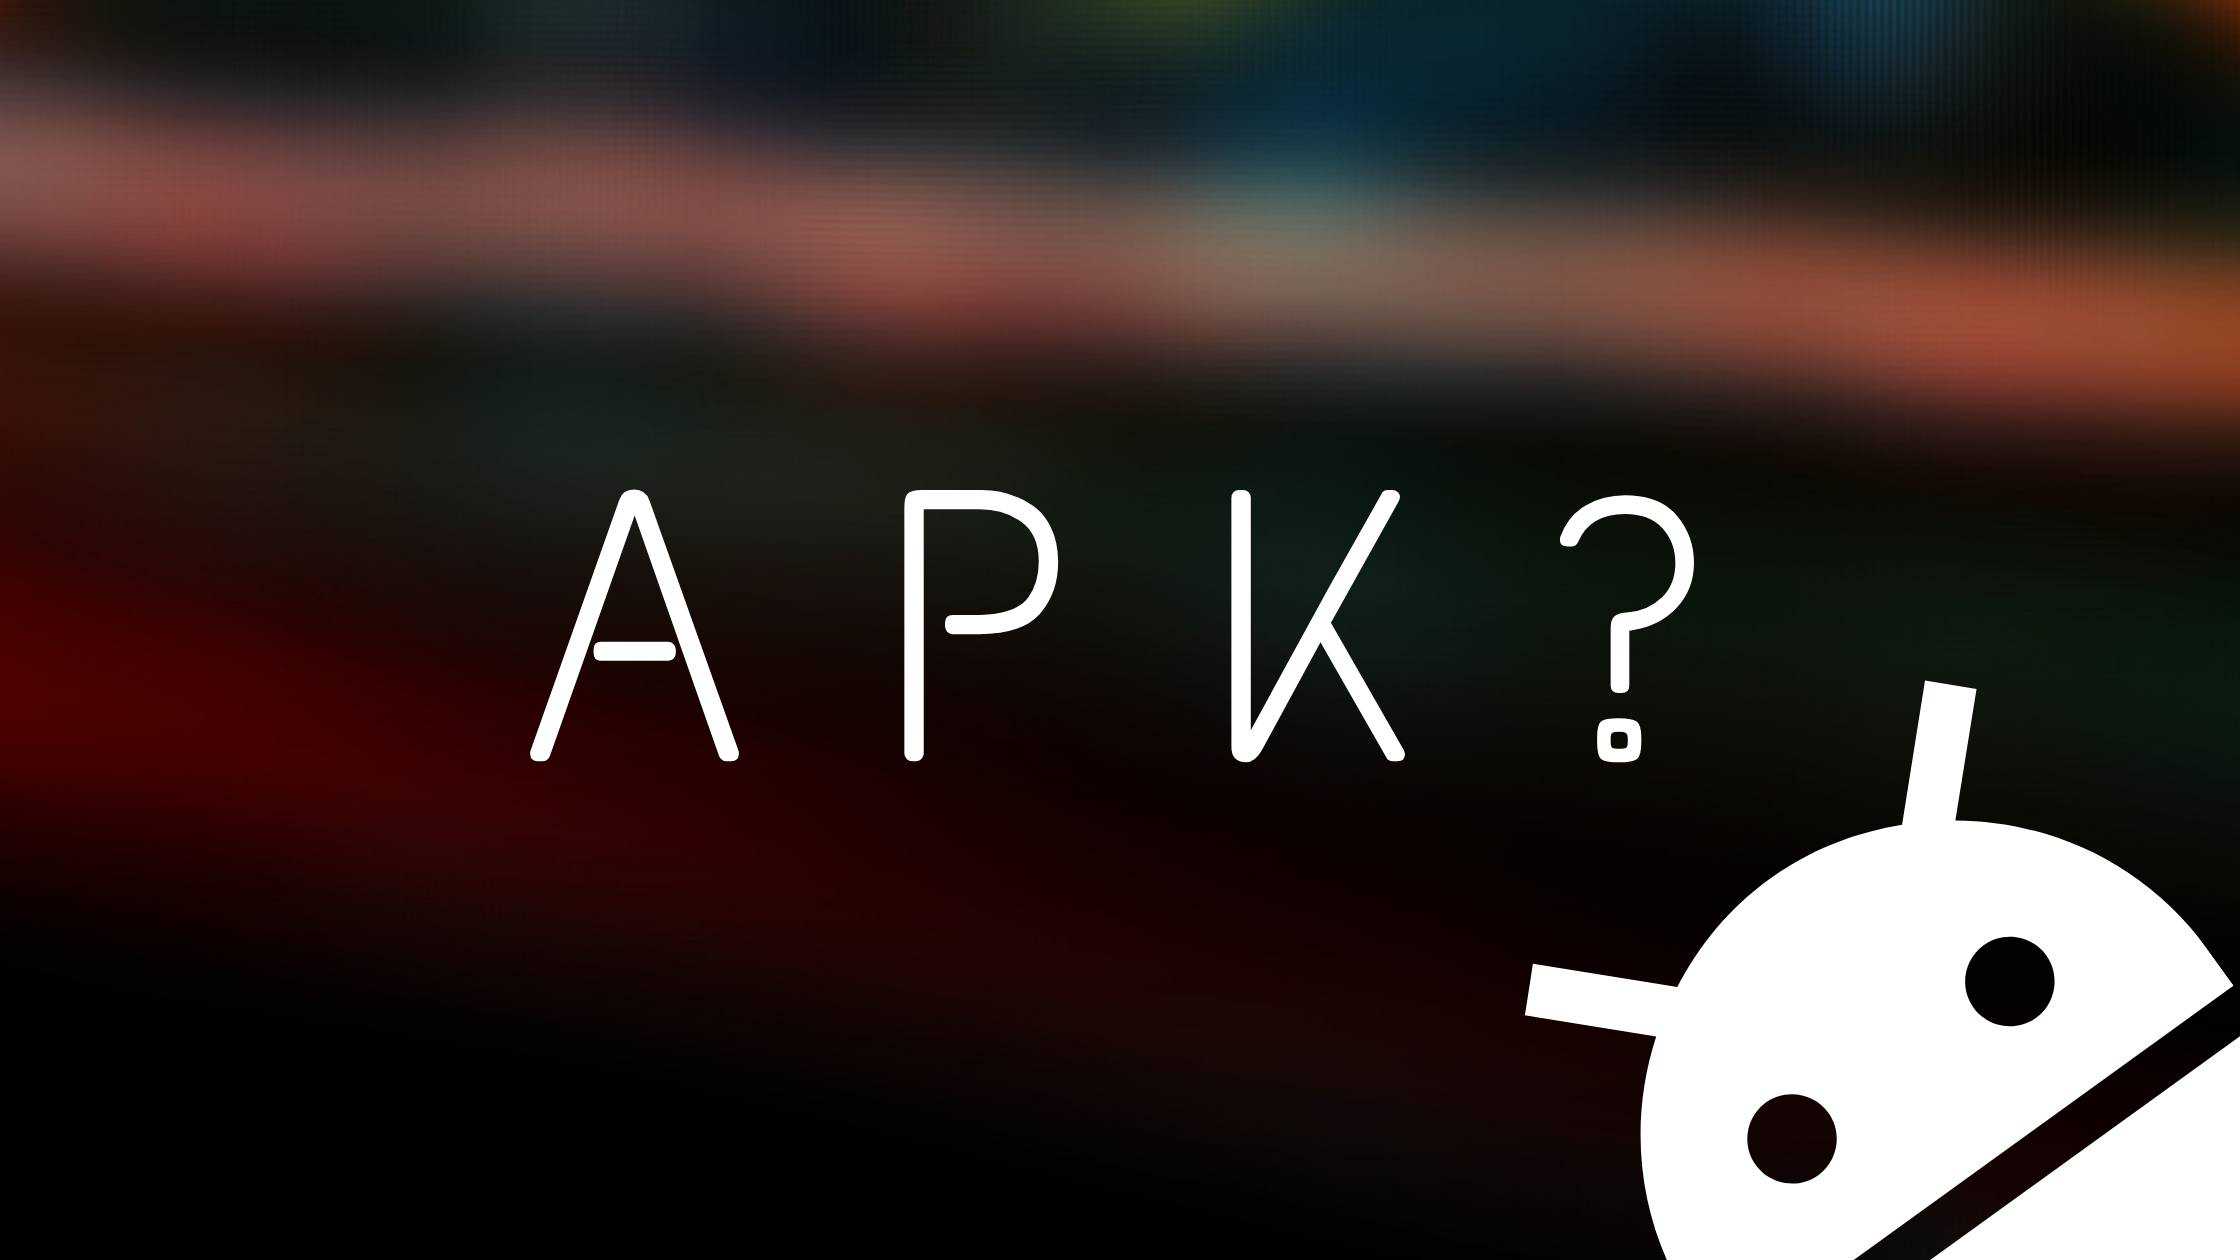 Full form of APK